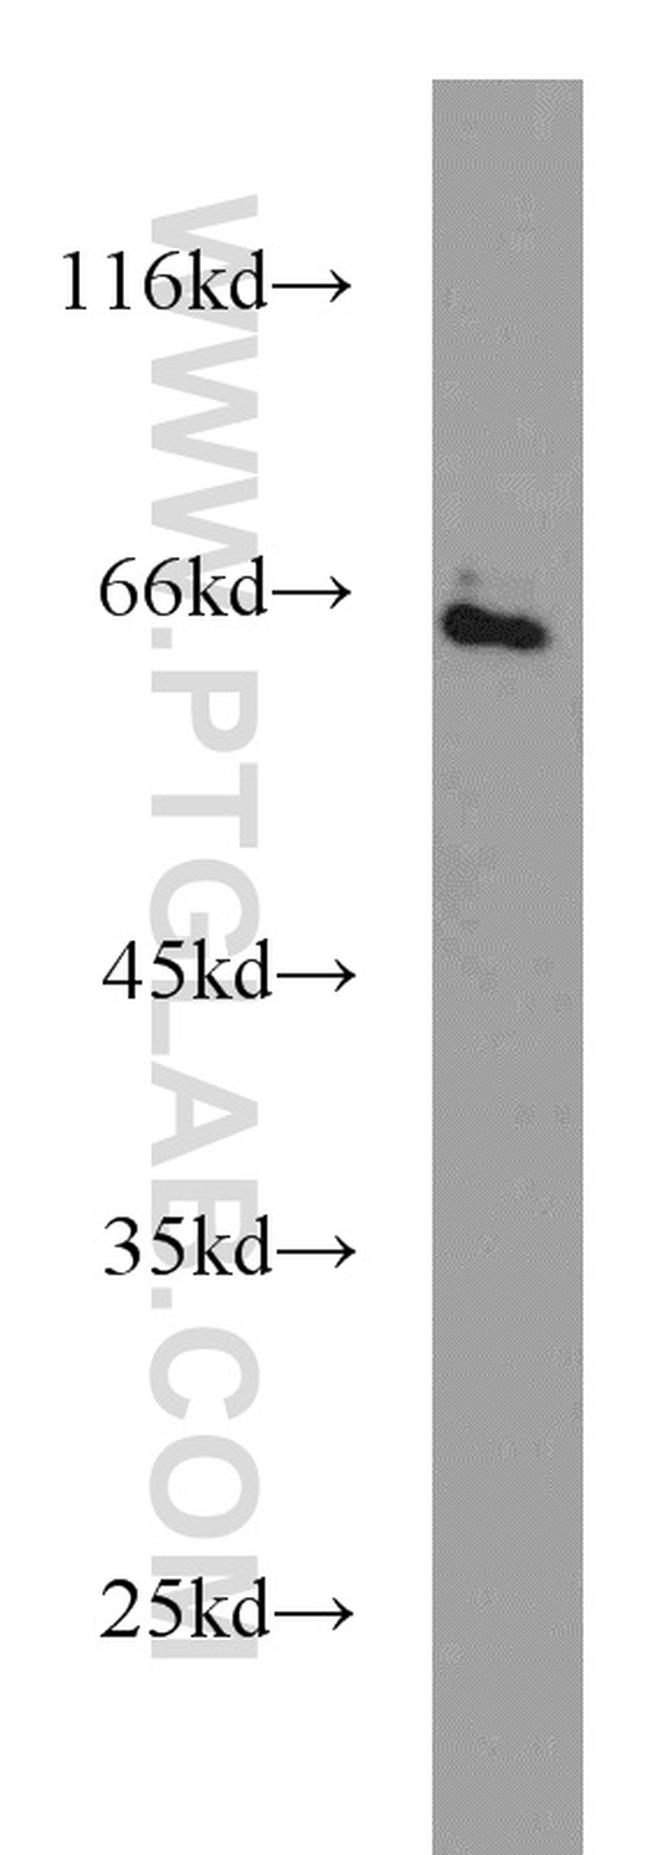 SMAD4 Antibody in Western Blot (WB)